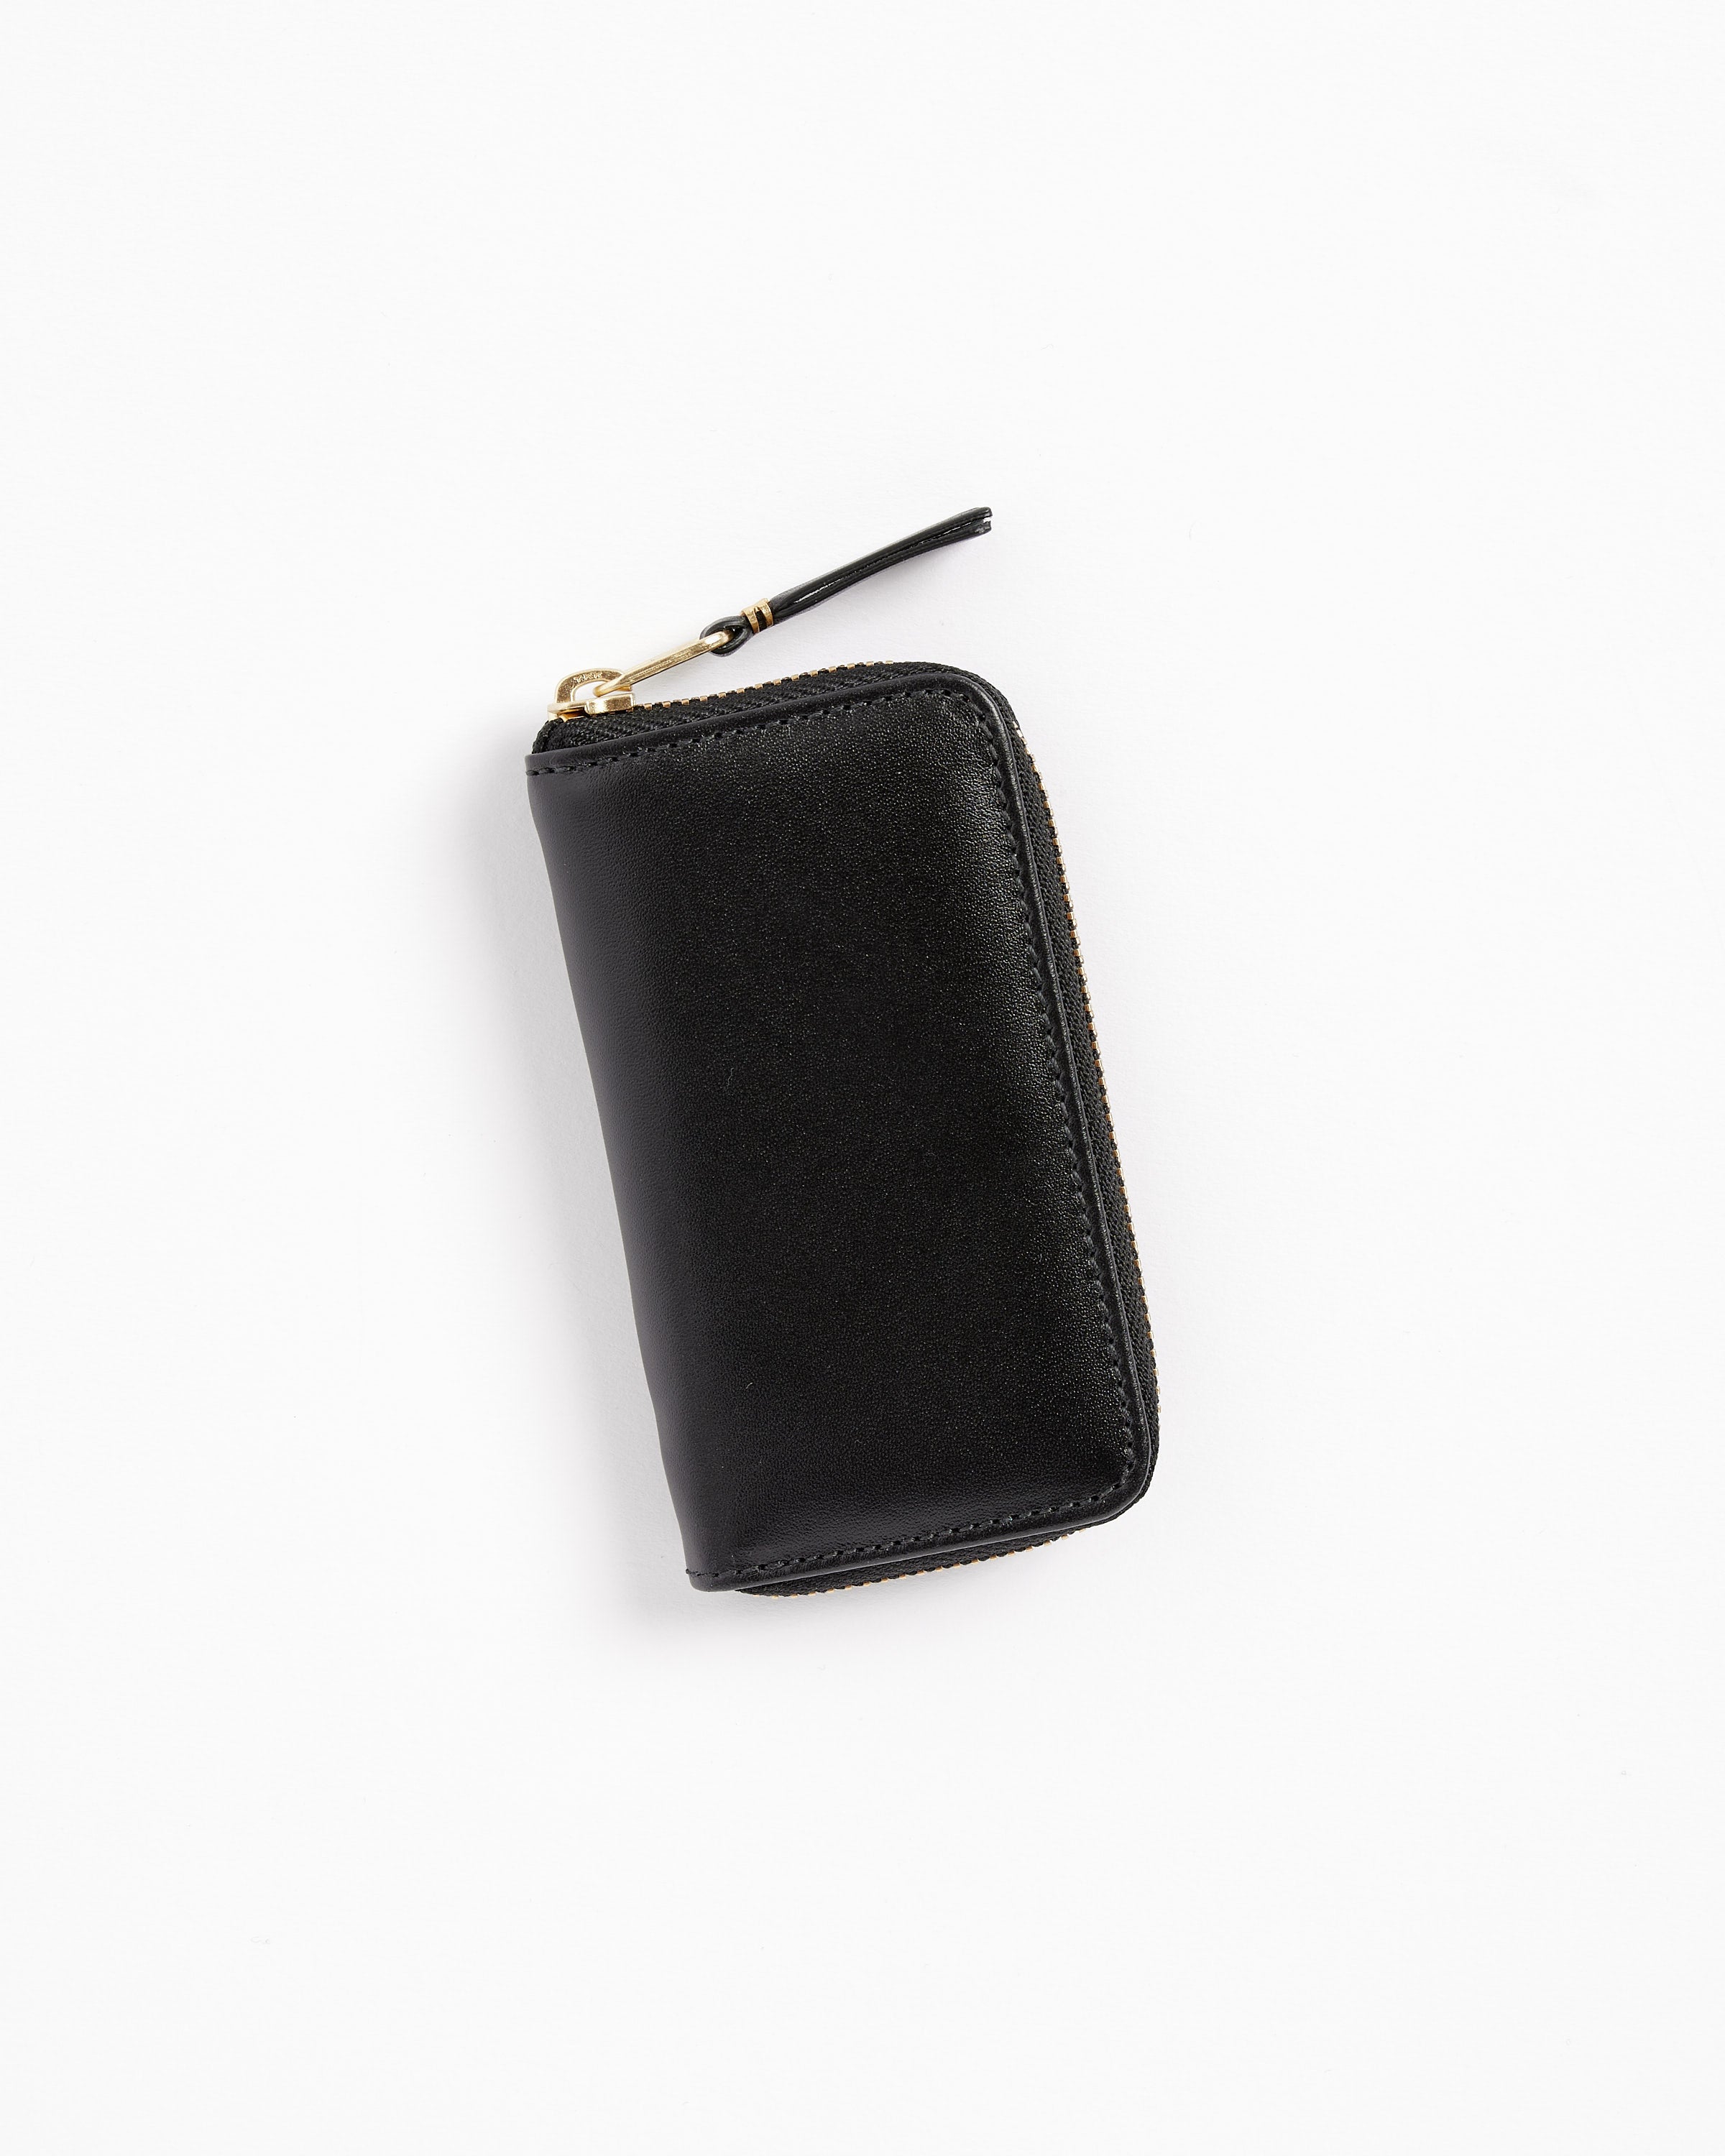 HEREU Top Zip Leather Wristlet Wallet Zipped Pouch in Black